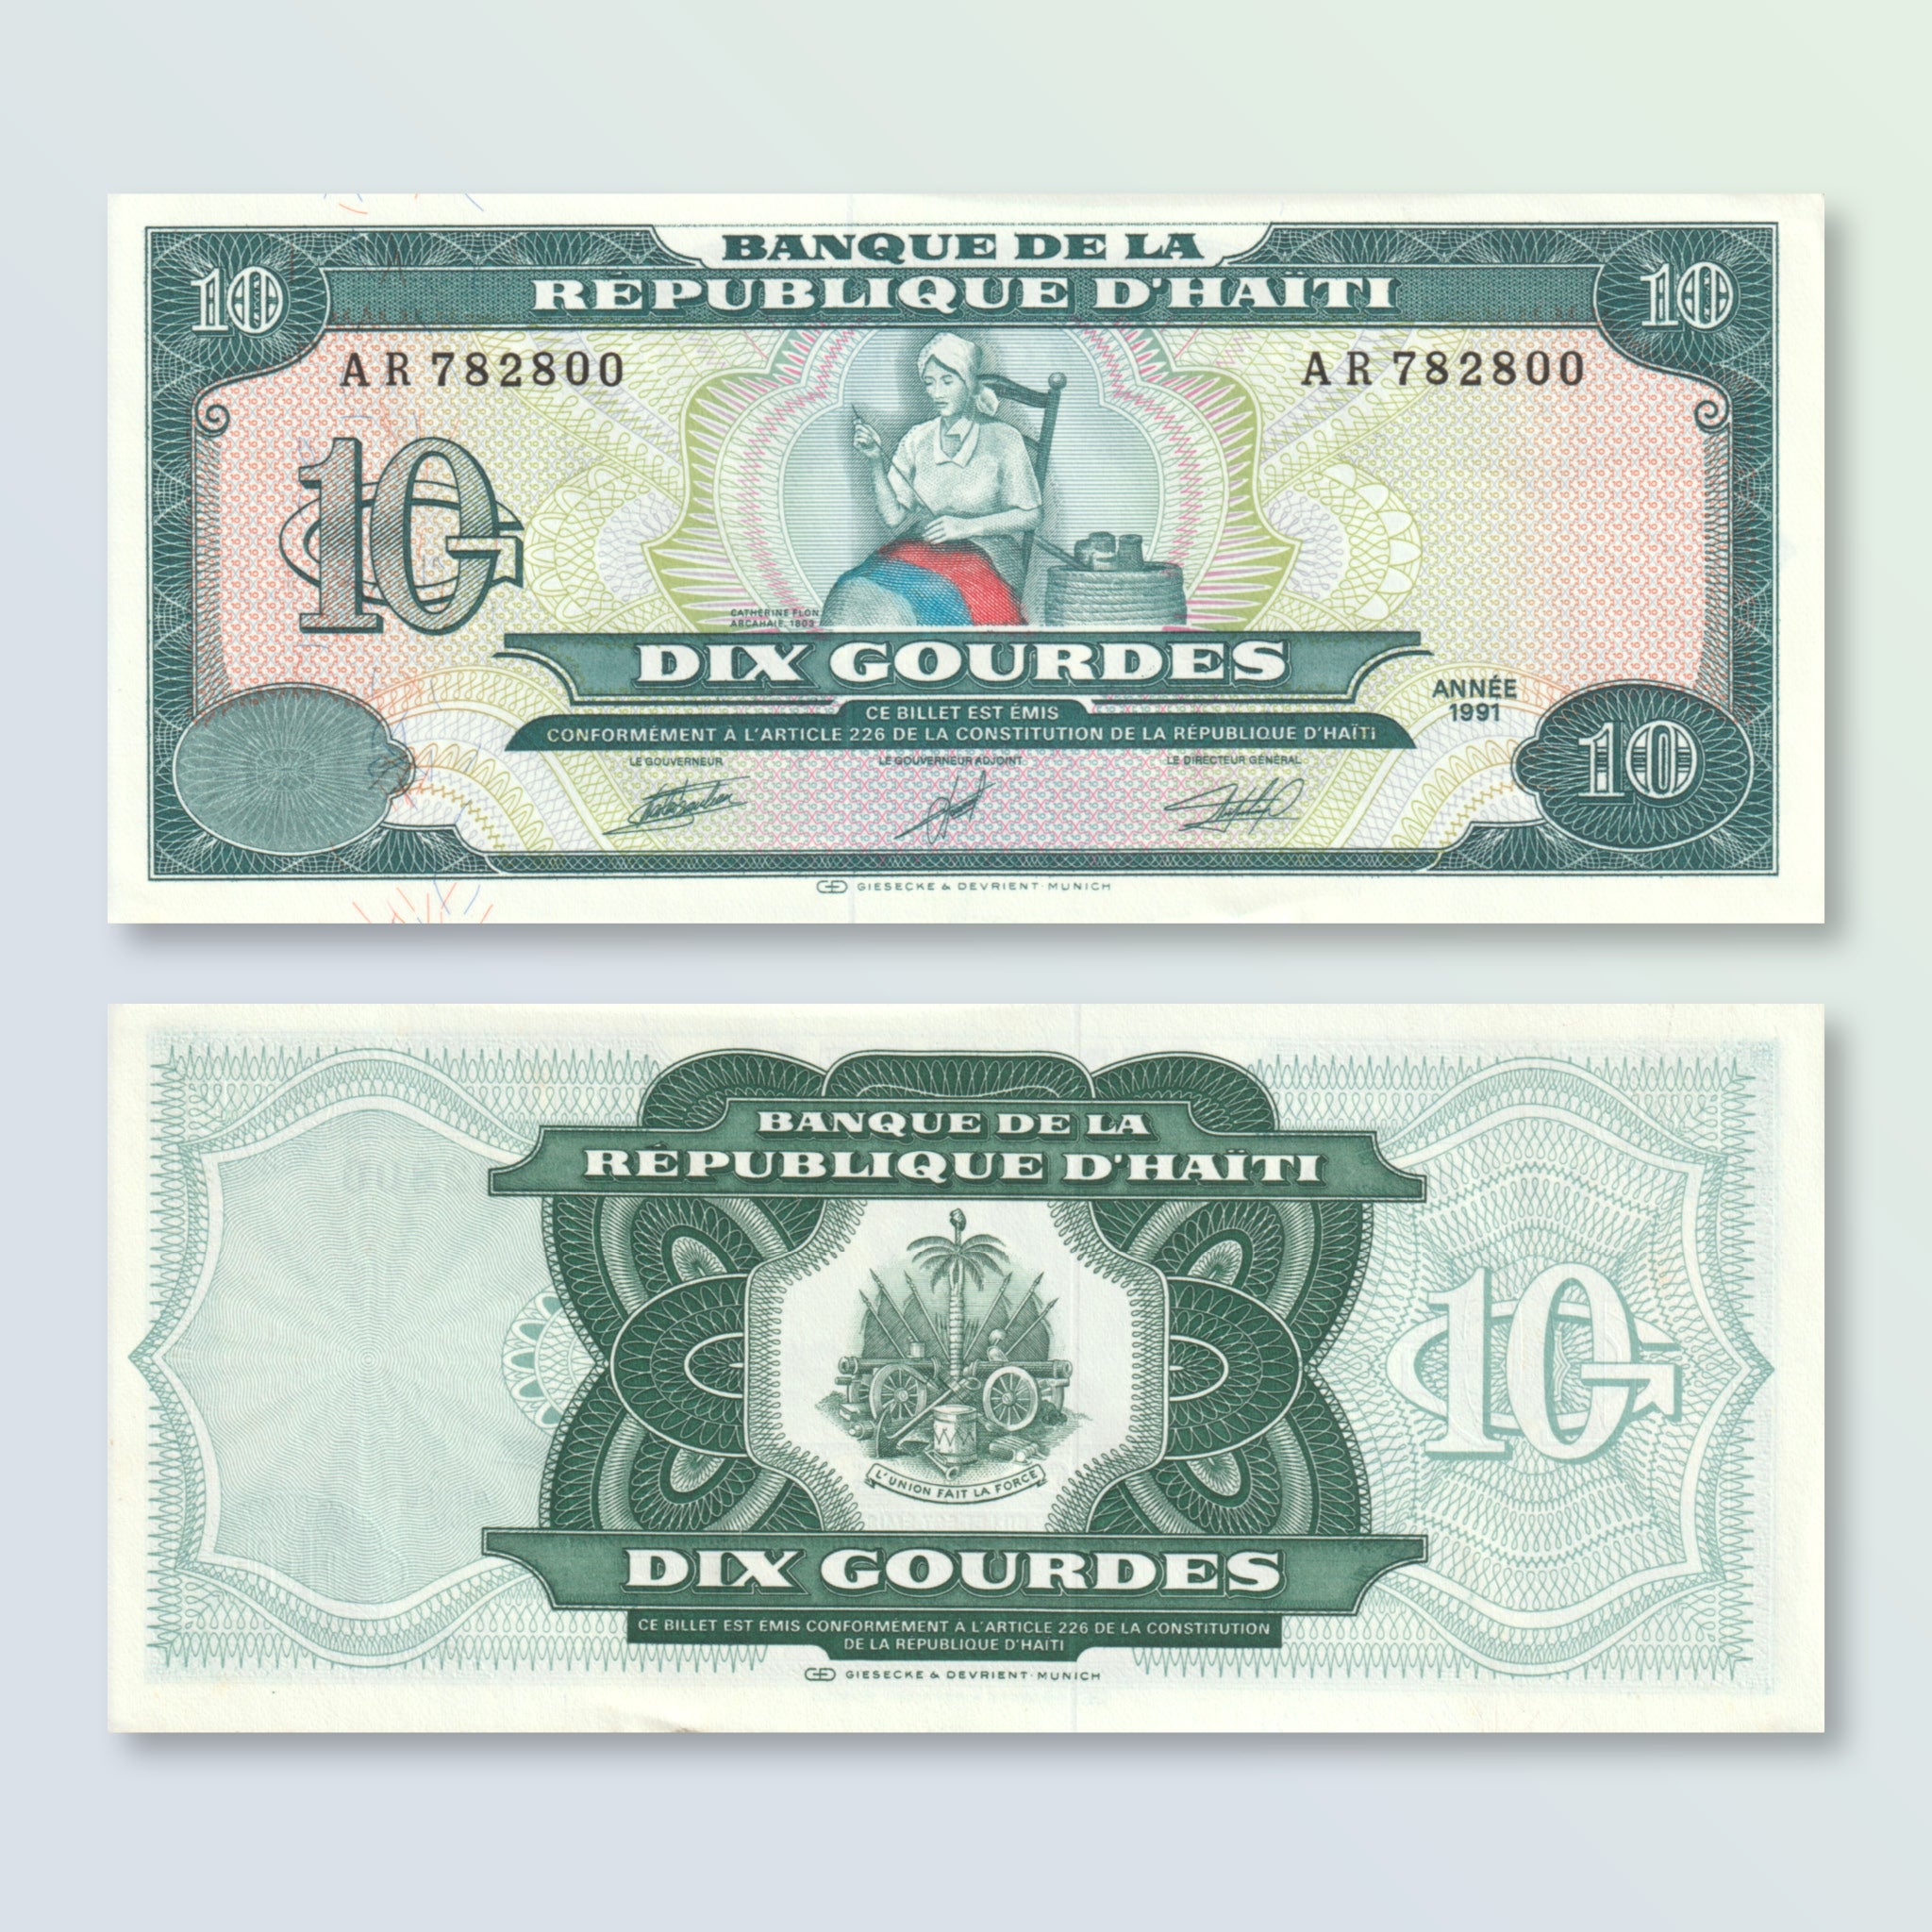 Haiti 10 Gourdes, 1991, B828a, P256a, UNC - Robert's World Money - World Banknotes